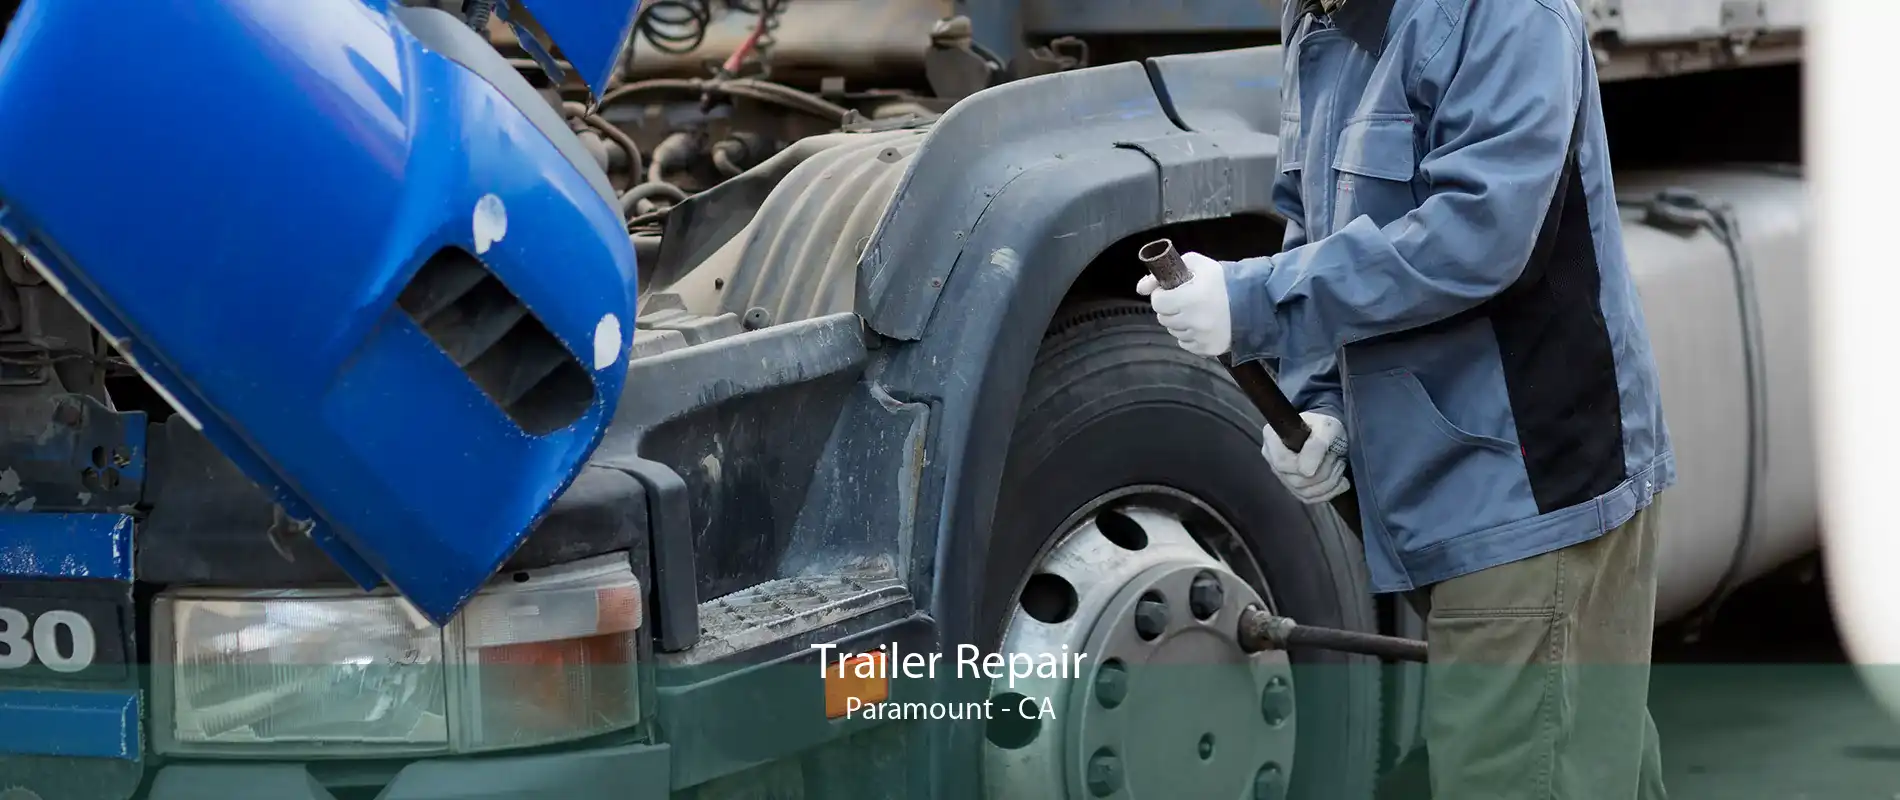 Trailer Repair Paramount - CA